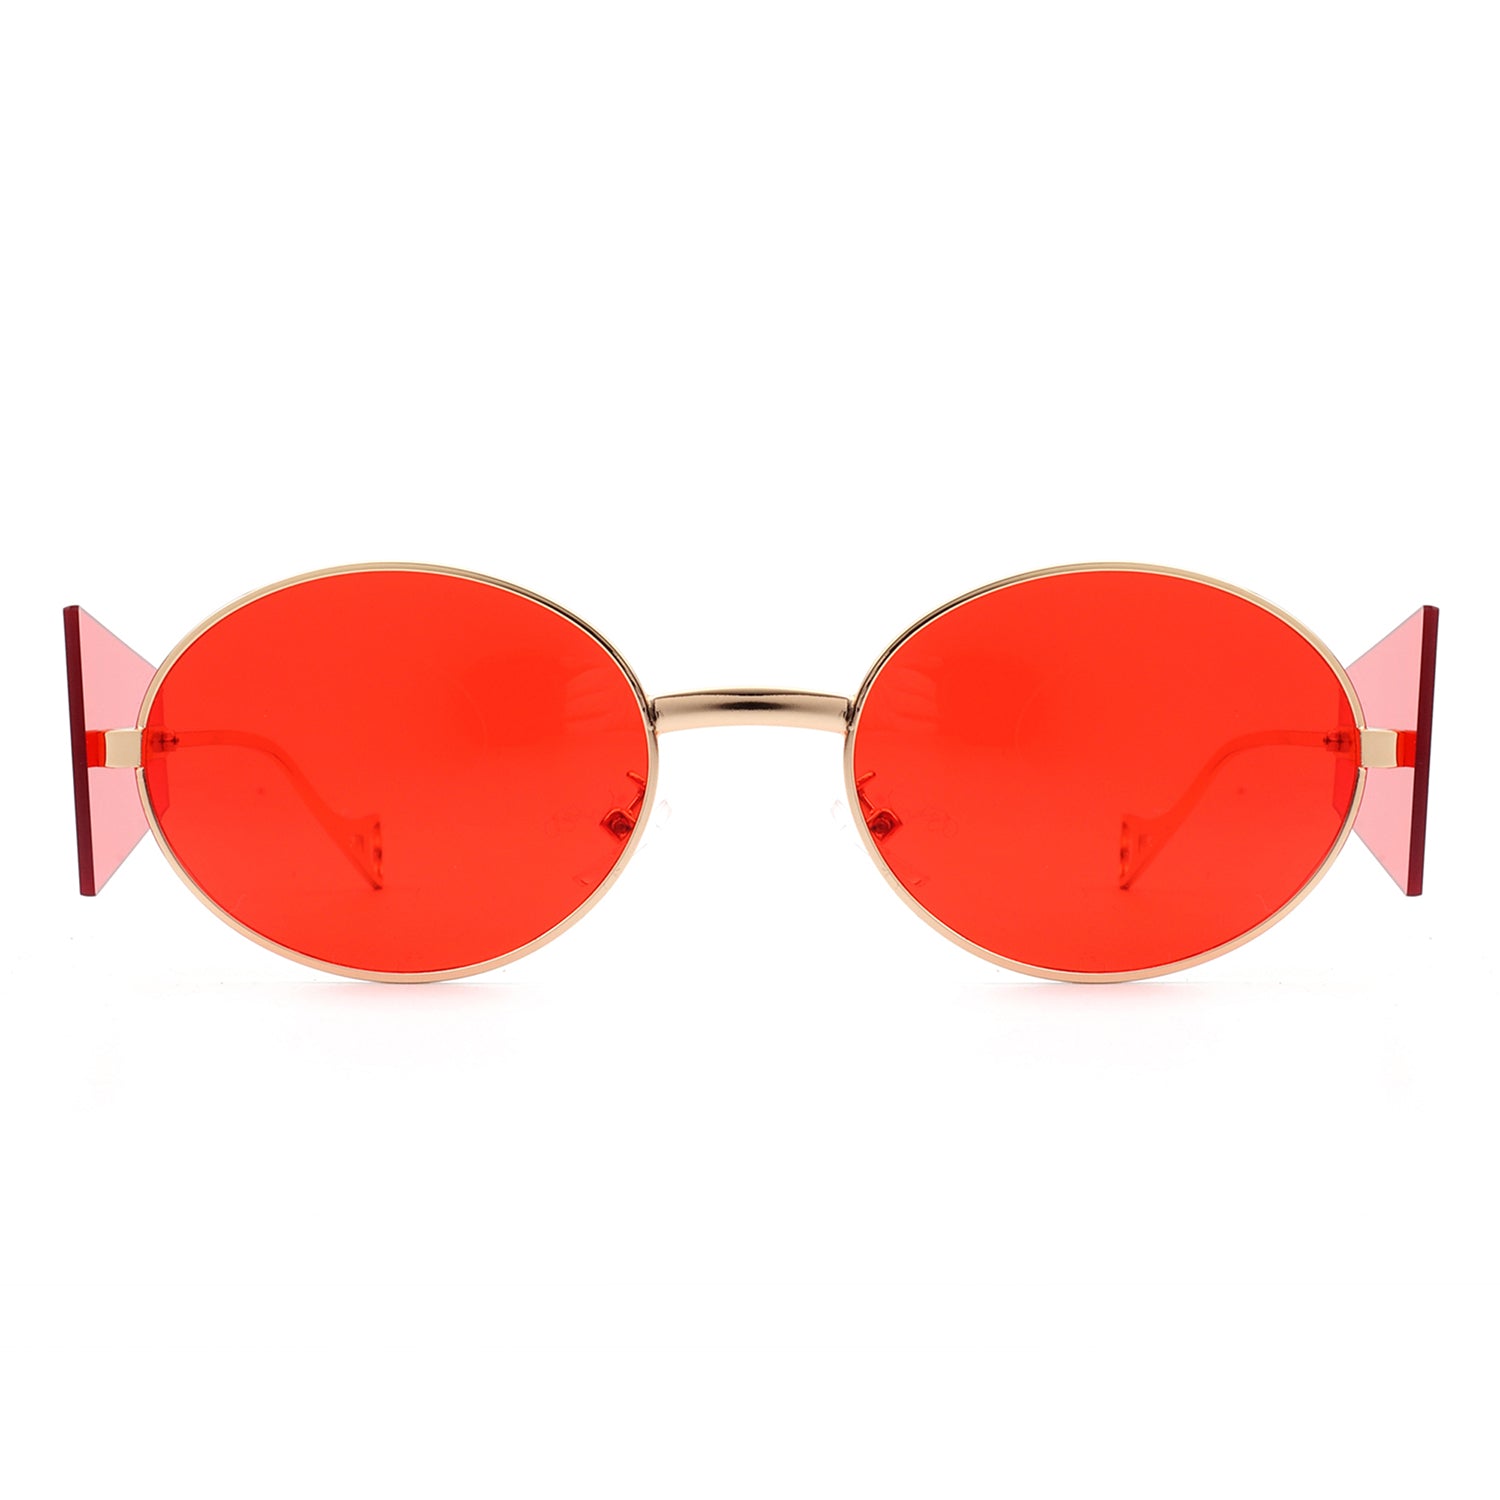 HW3003 - Circle Round Retro Oval Futuristic Vintage Tinted Fashion Sunglasses